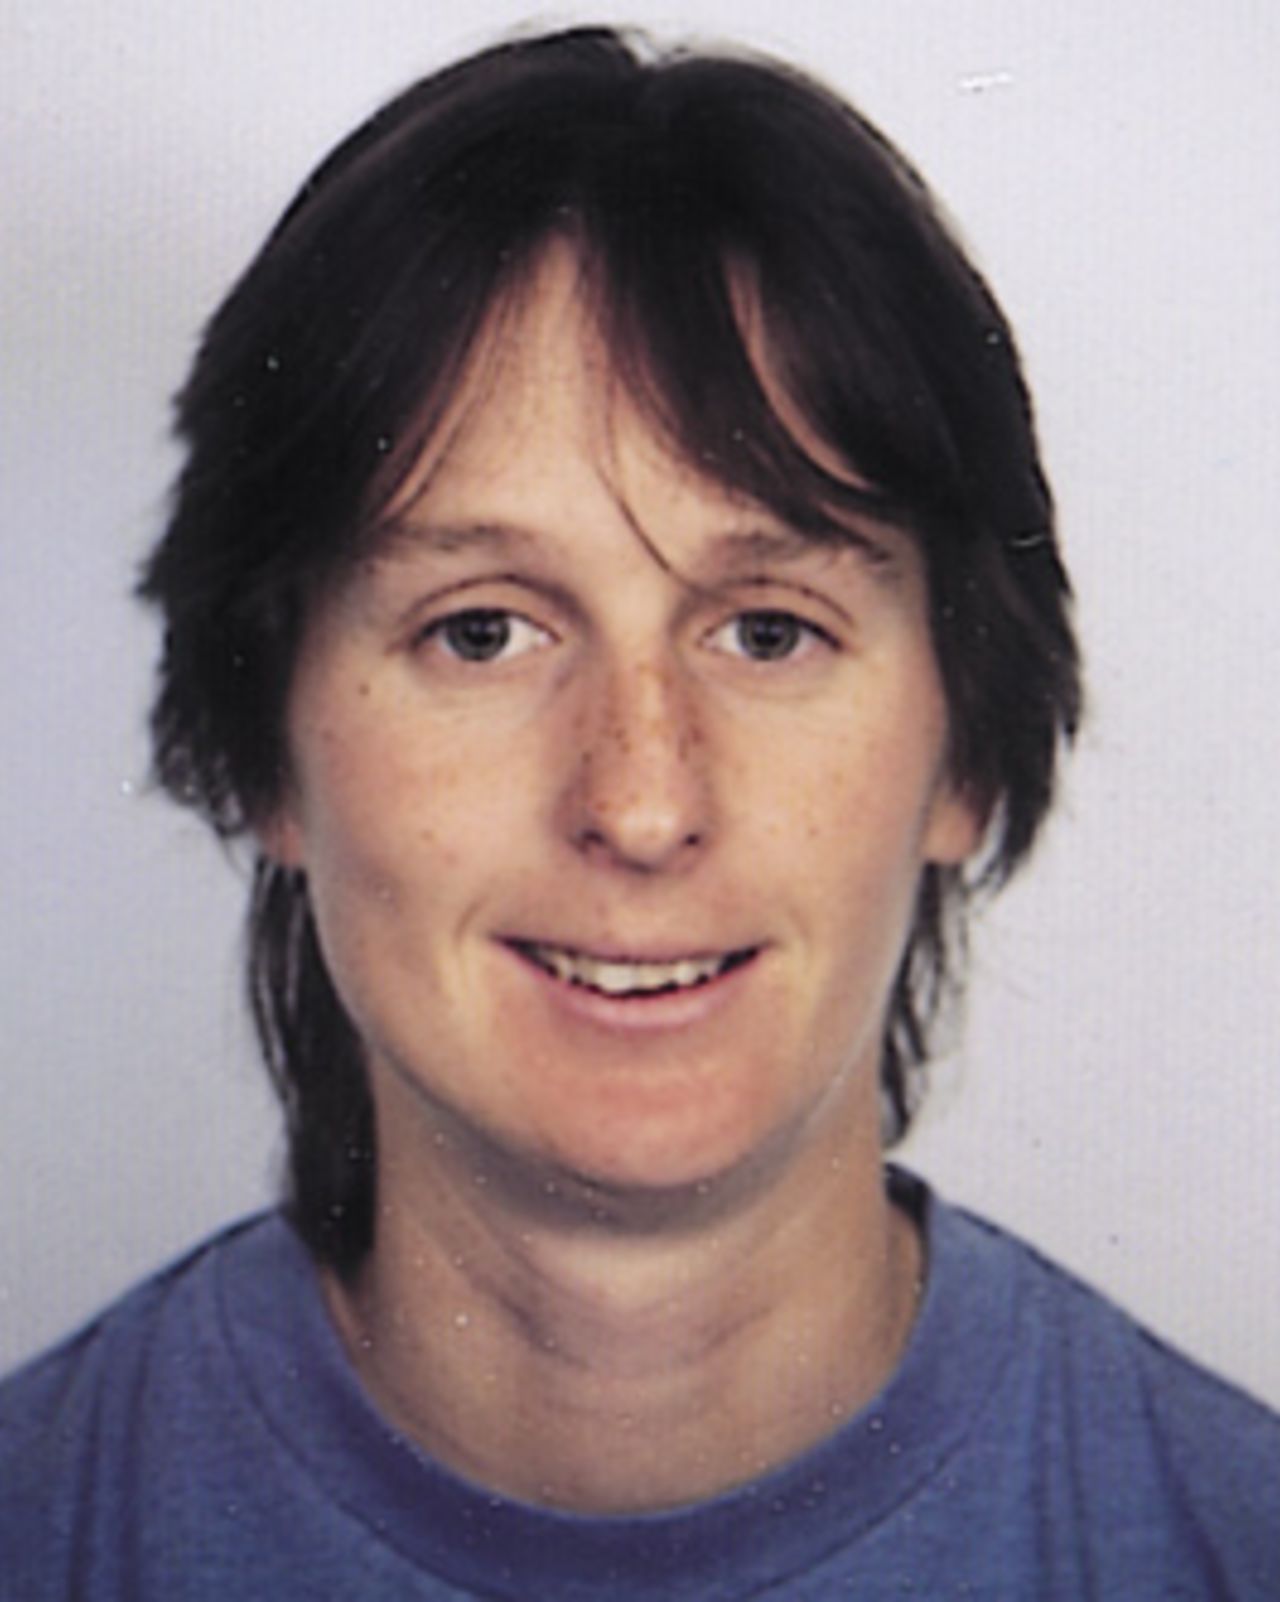 Portrait of Barbara McDonald - Ireland player in the CricInfo Women's World Cup 2000